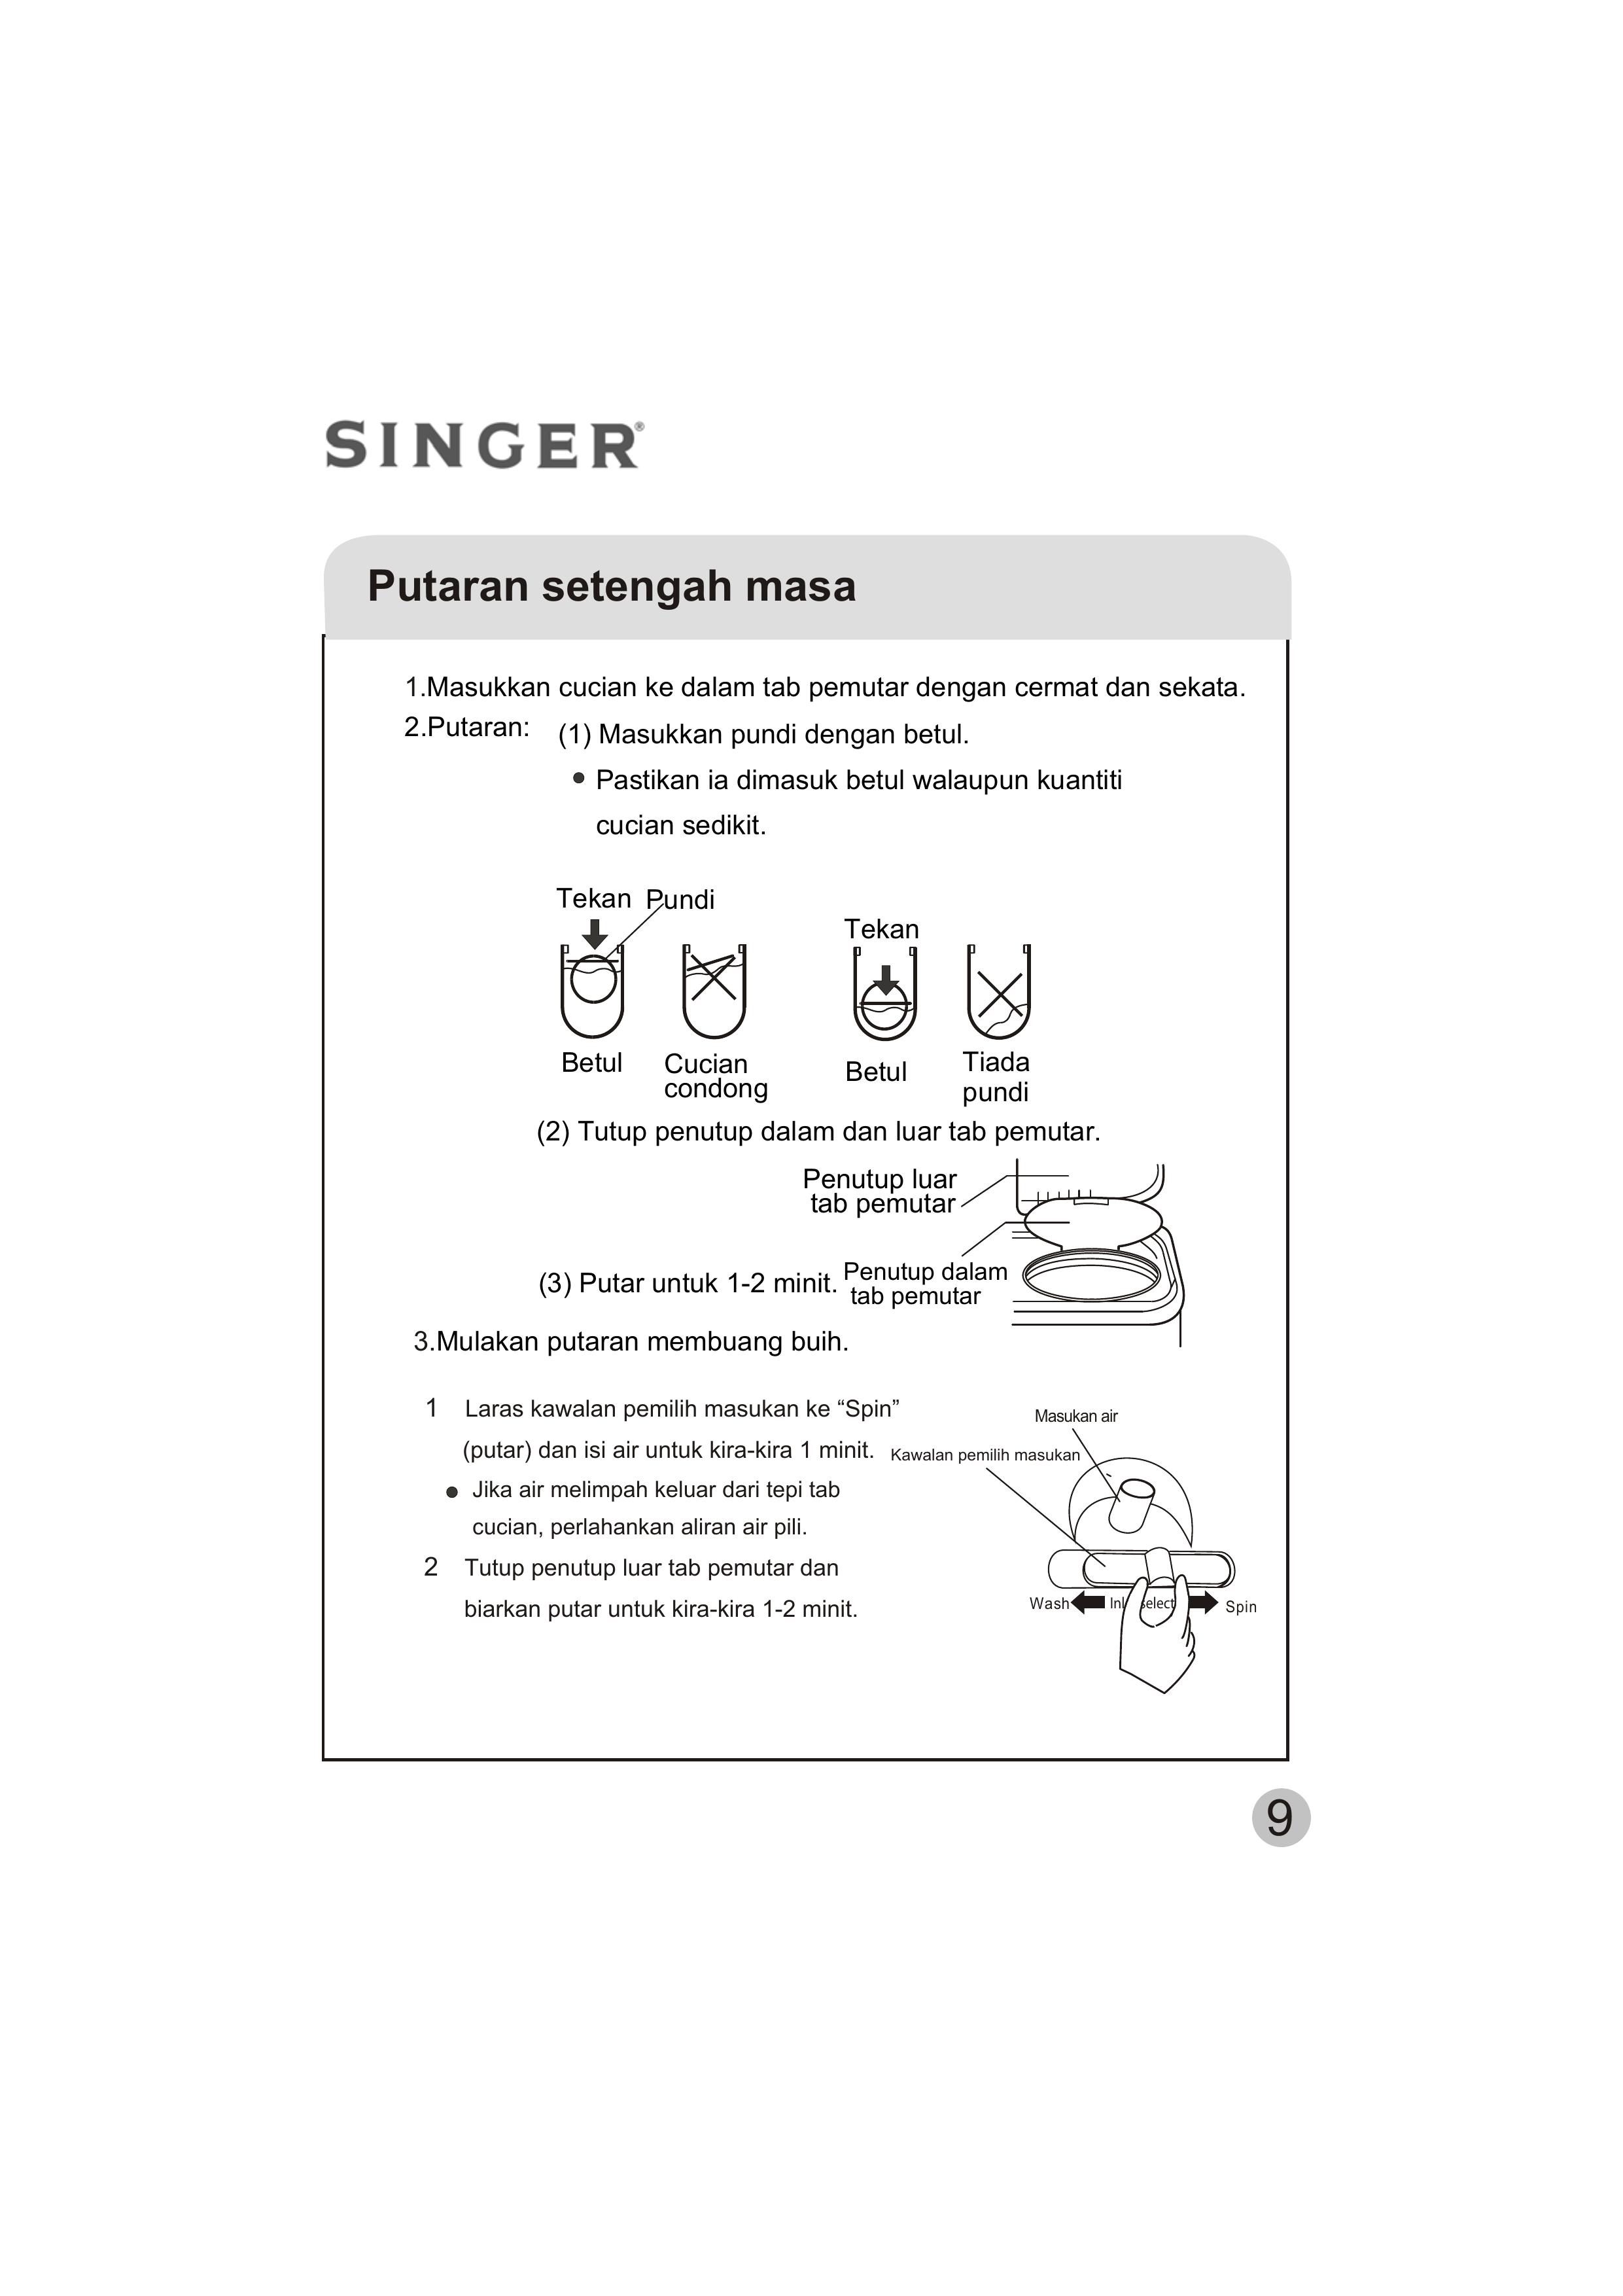 Singer WT5113 Washer/Dryer User Manual (Page 27)